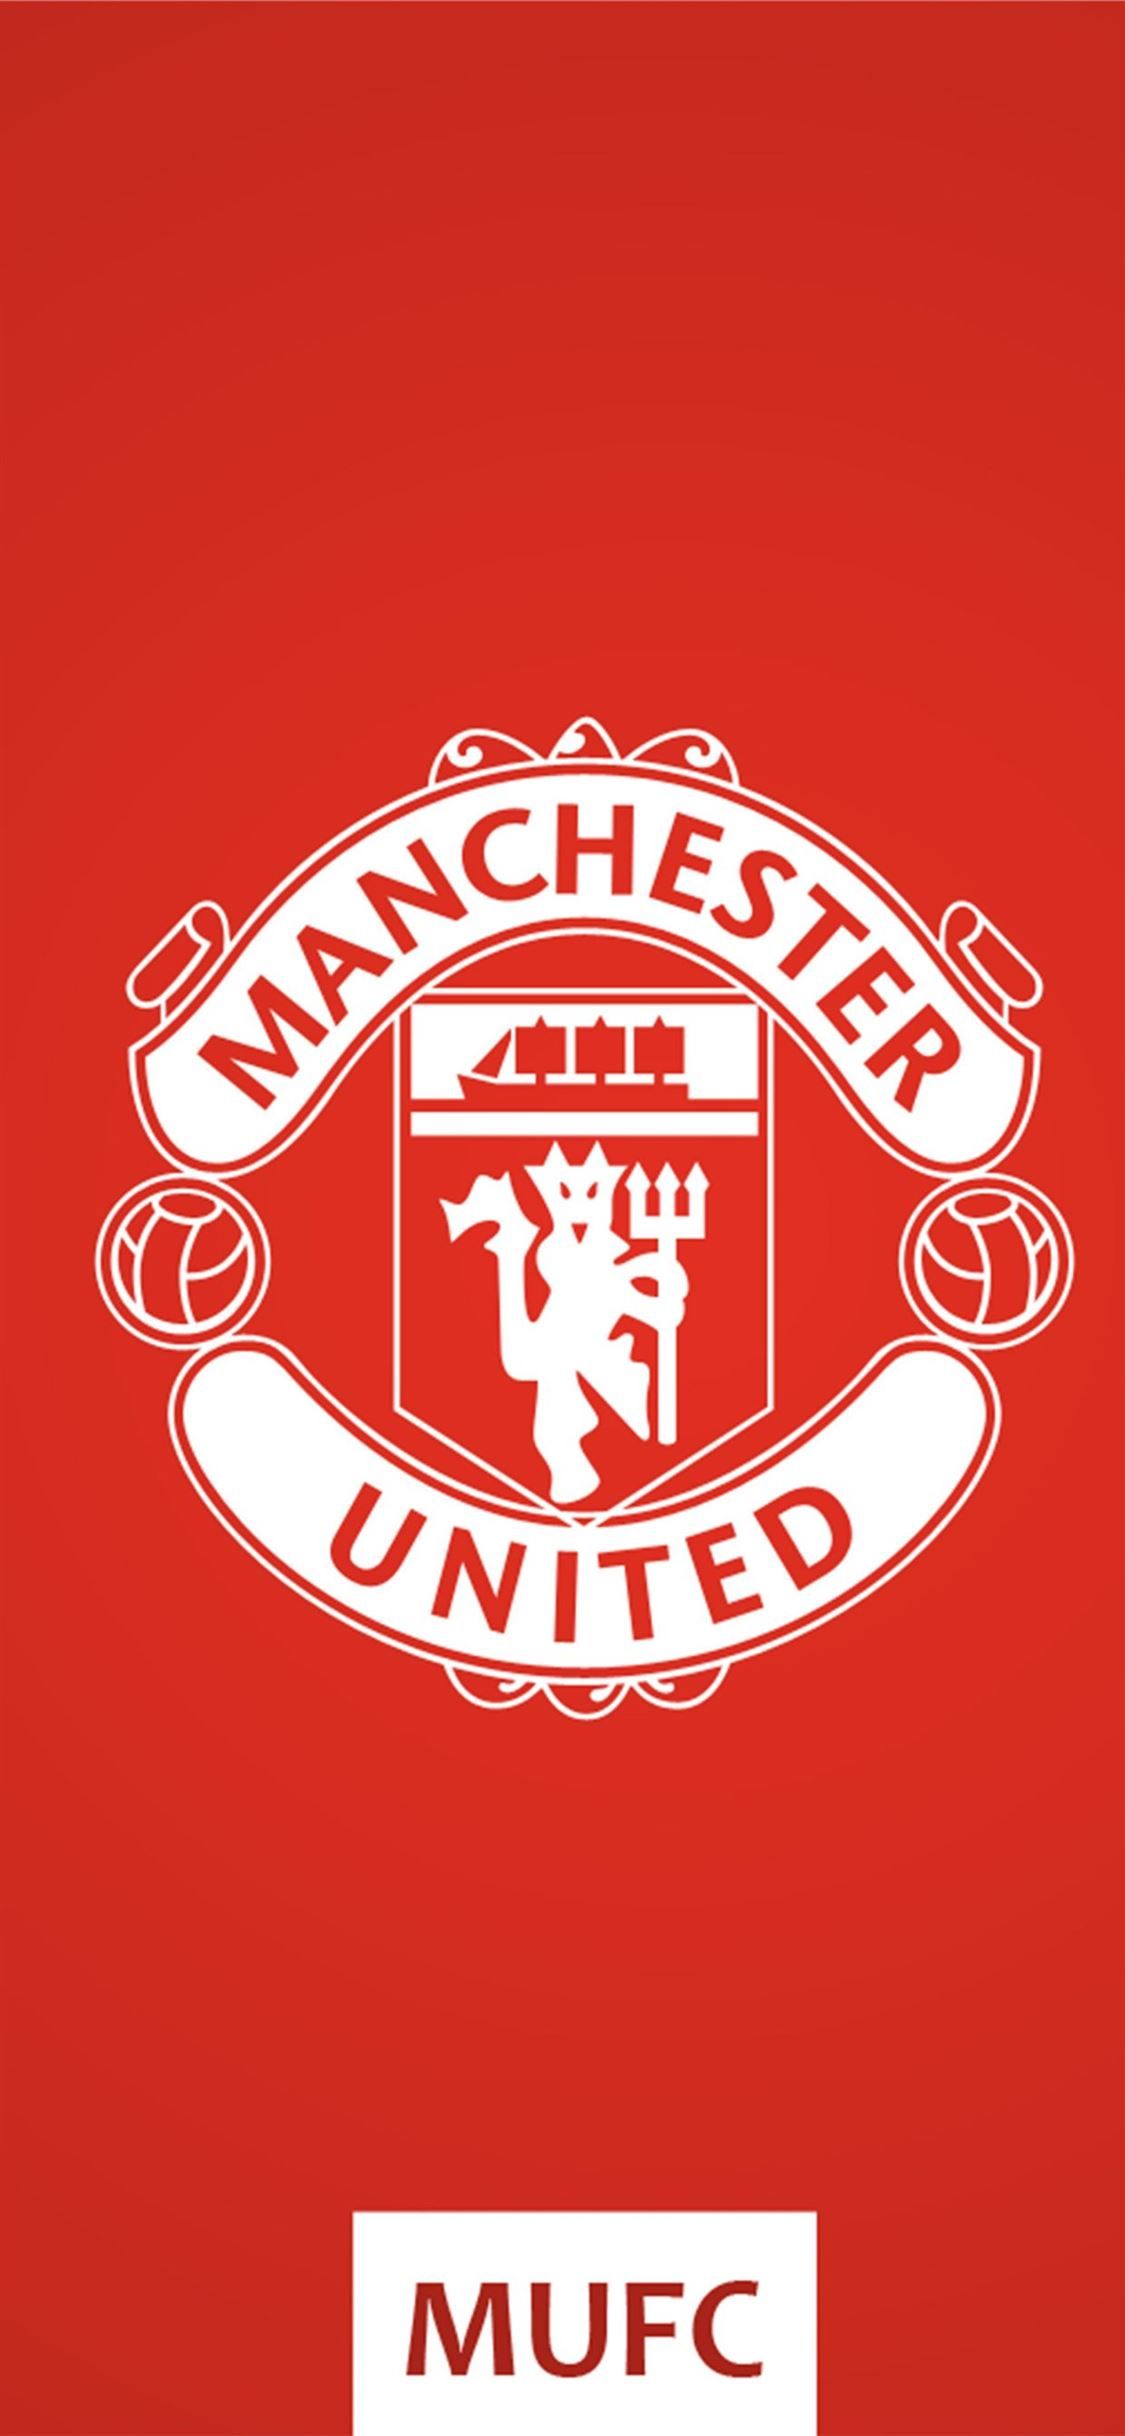 Manchester United Manchester United 4k #AlexisSanchez #SportCelebrity #Soccer. Manchester united wallpaper iphone, Manchester united, Manchester united wallpaper